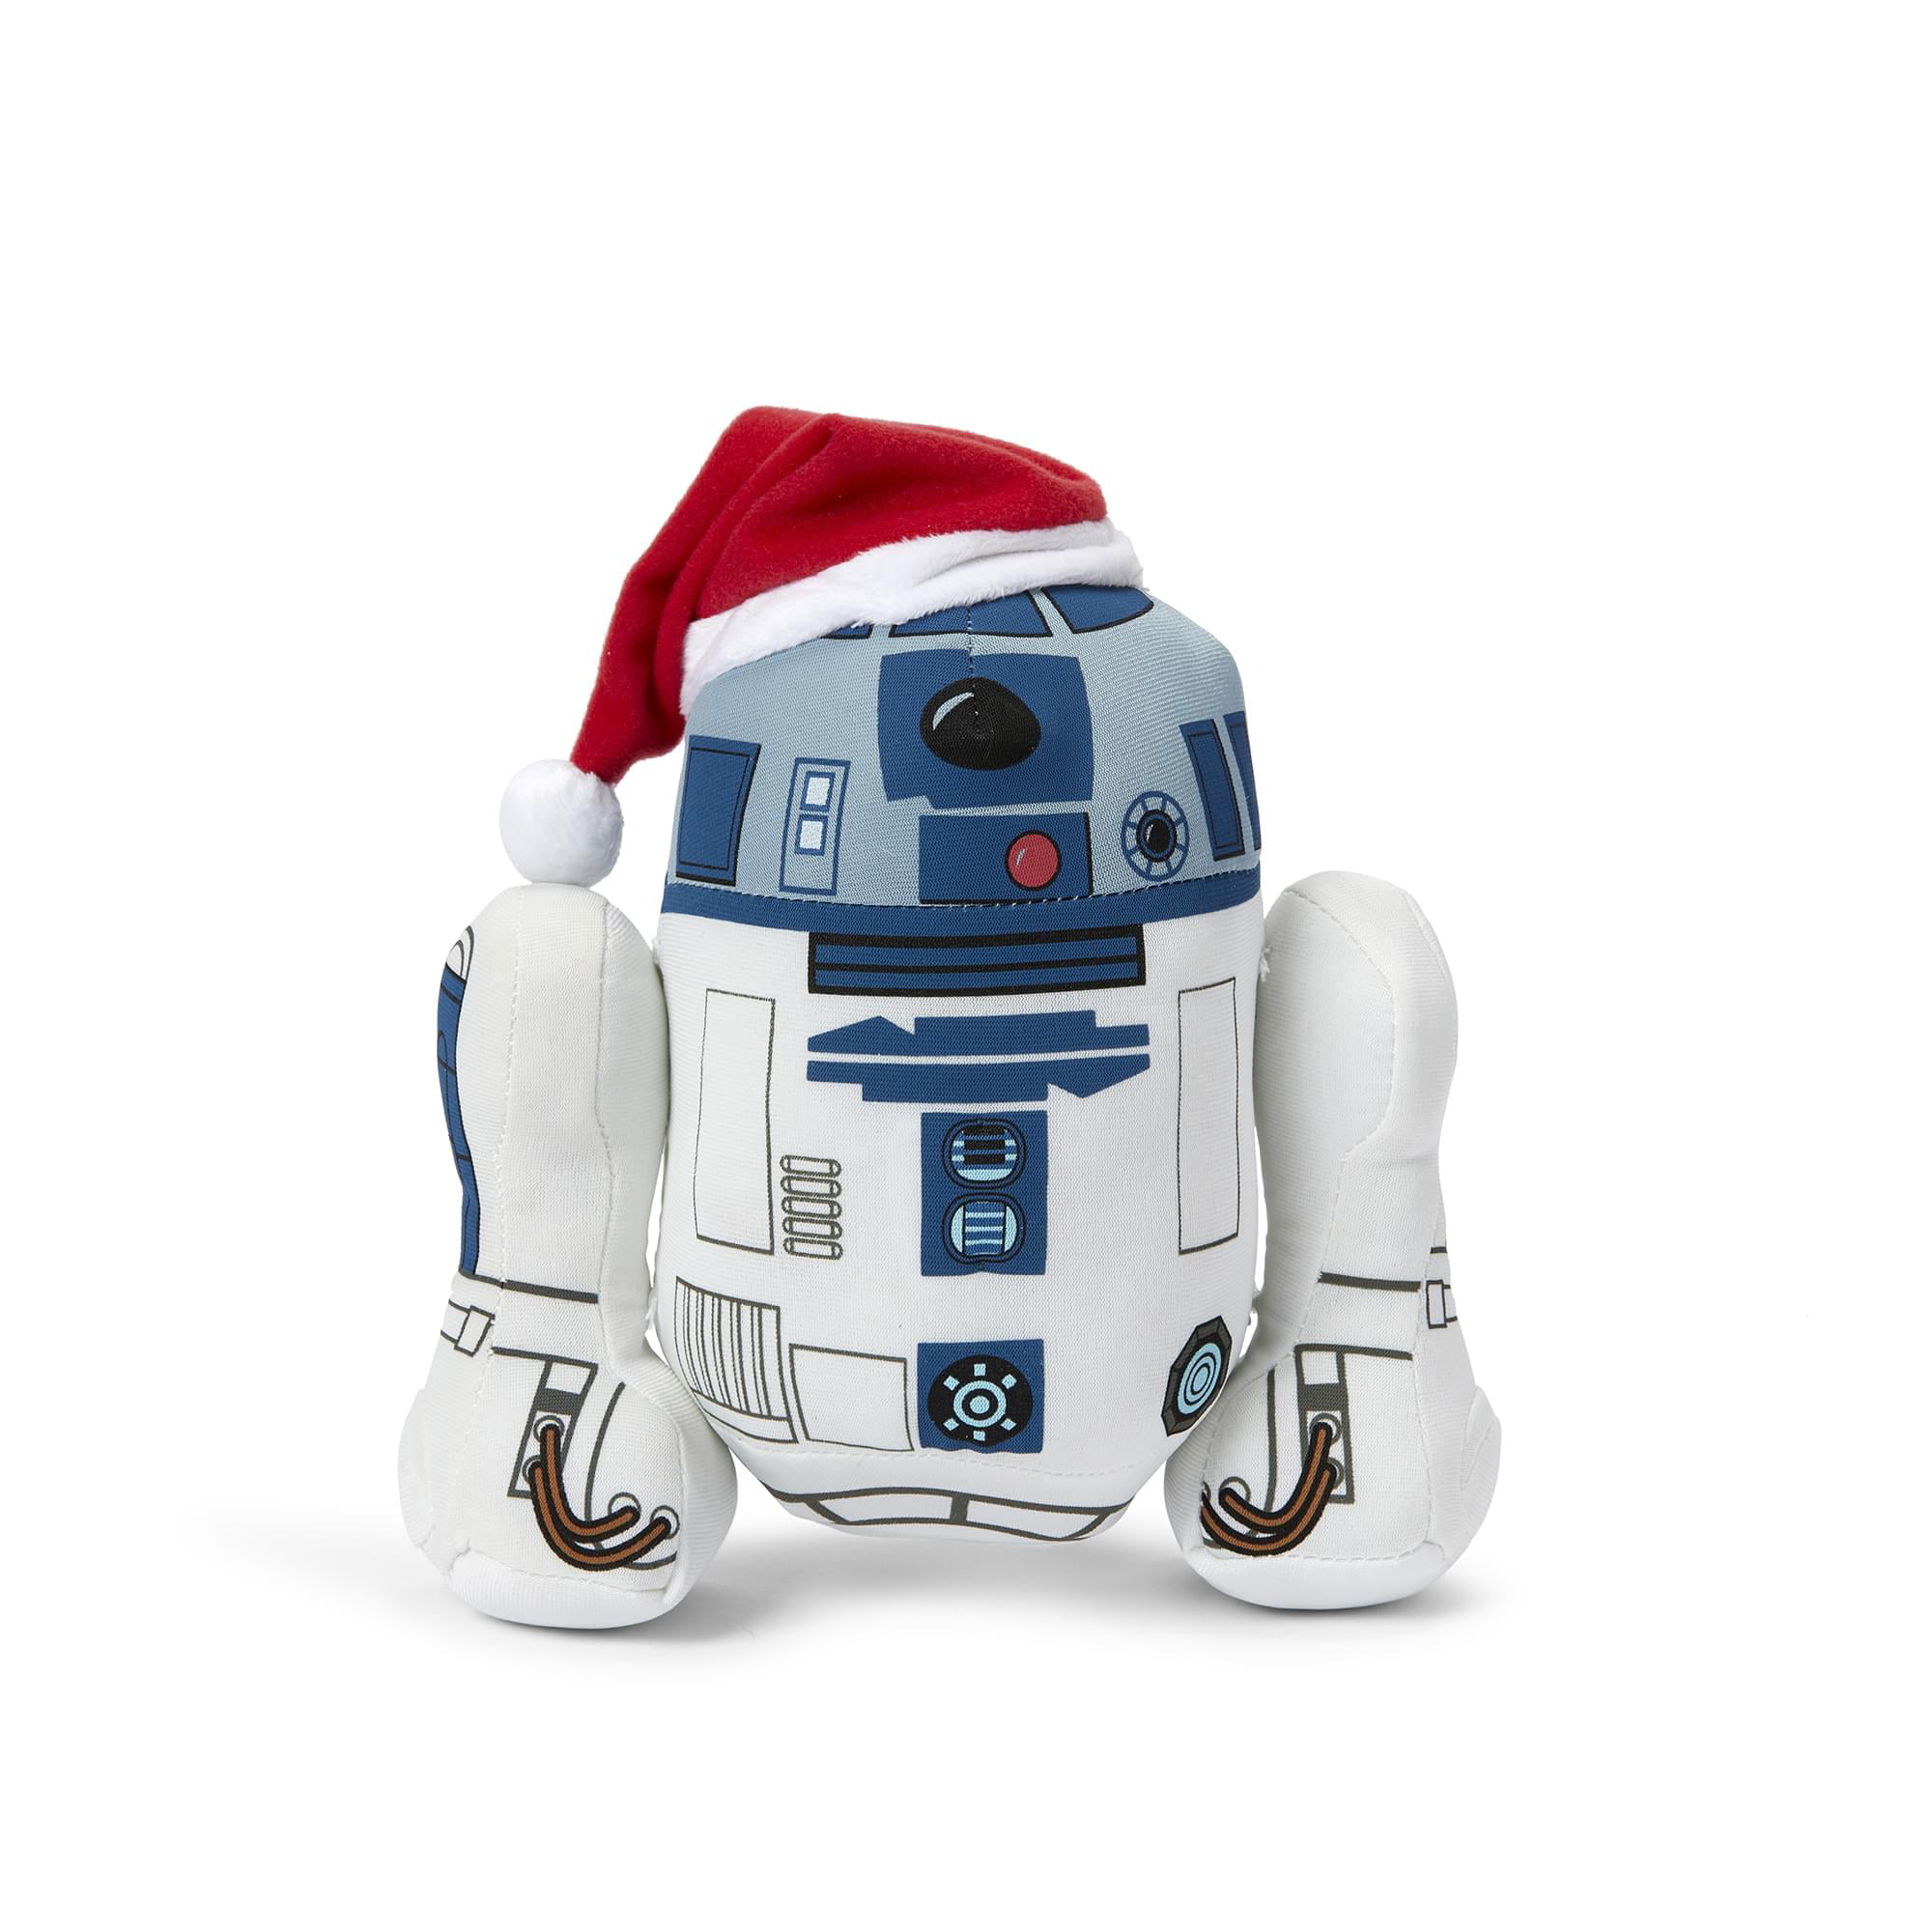 Multicolor Remote Control R2-D2 Droid Star Wars 7 Inch 2 Speed 